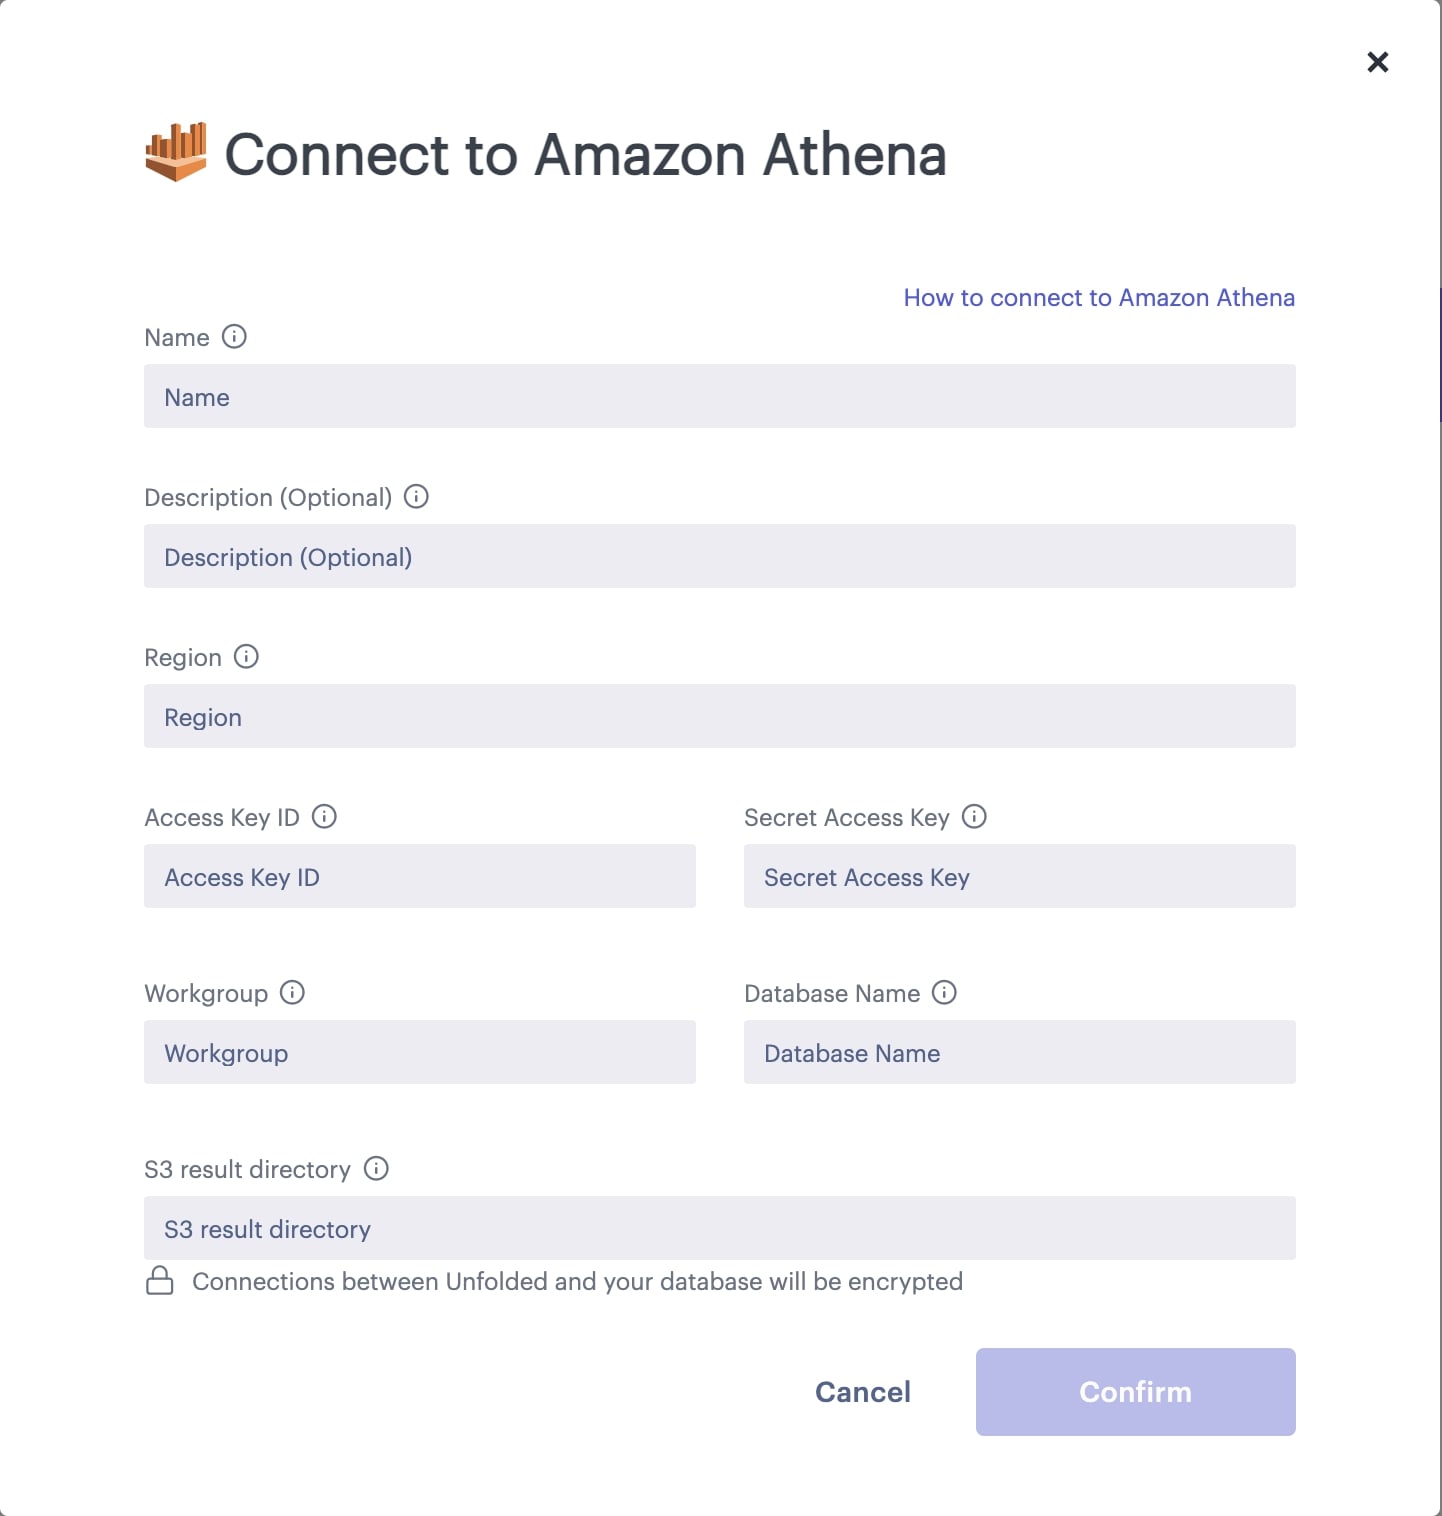 Amazon Athena Connector Form